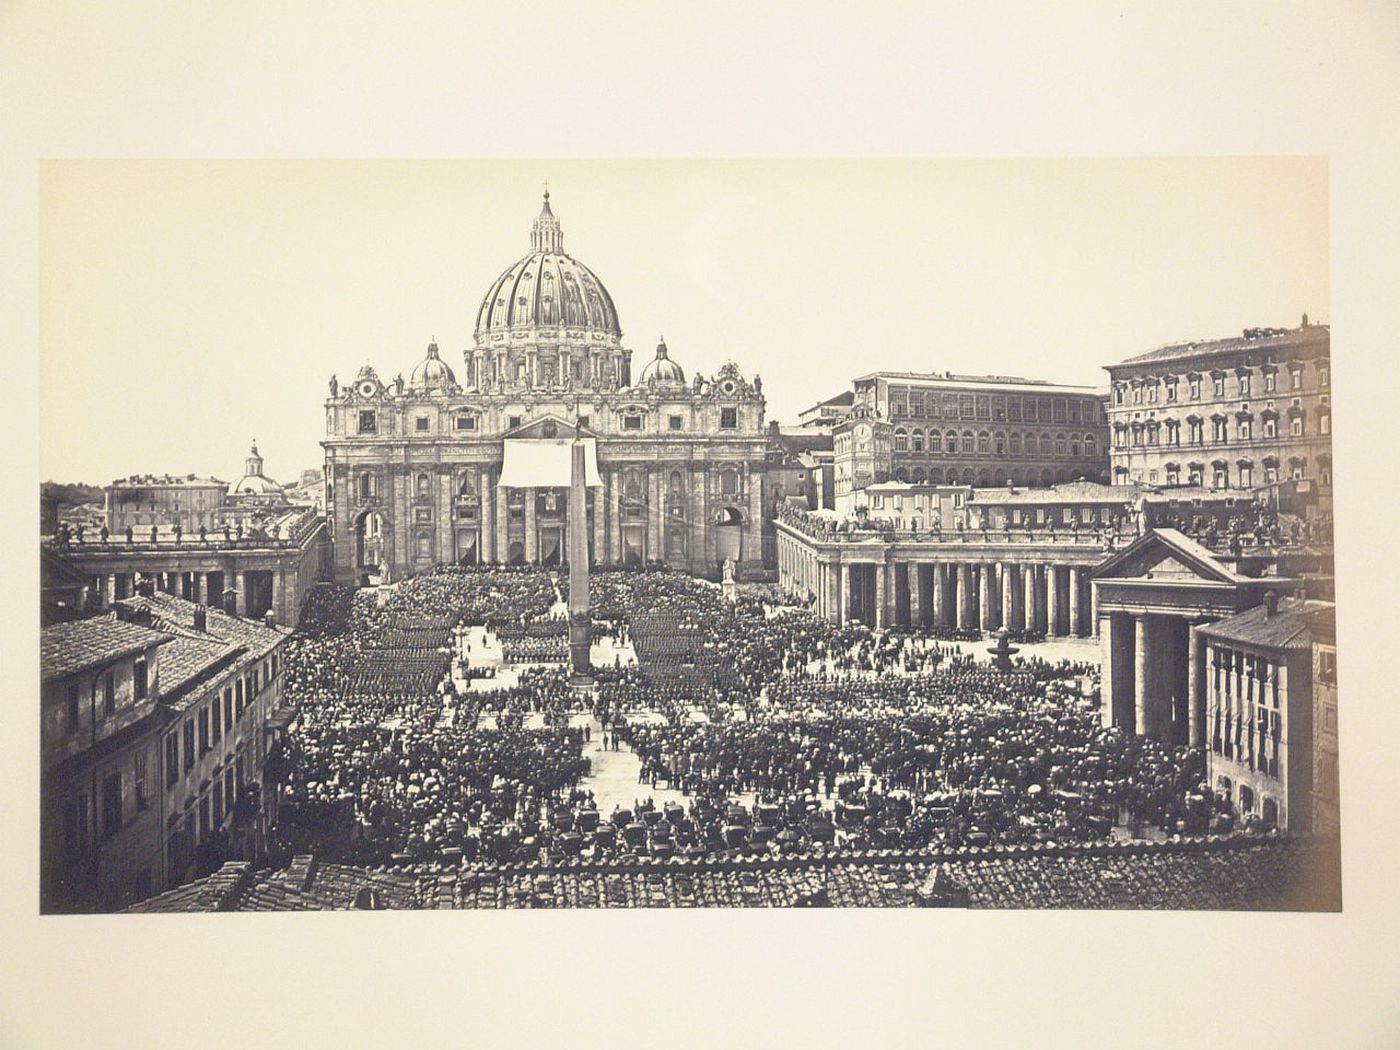 View of the Piazza San Pietro and the Basilica di San Pietro, Vatican City